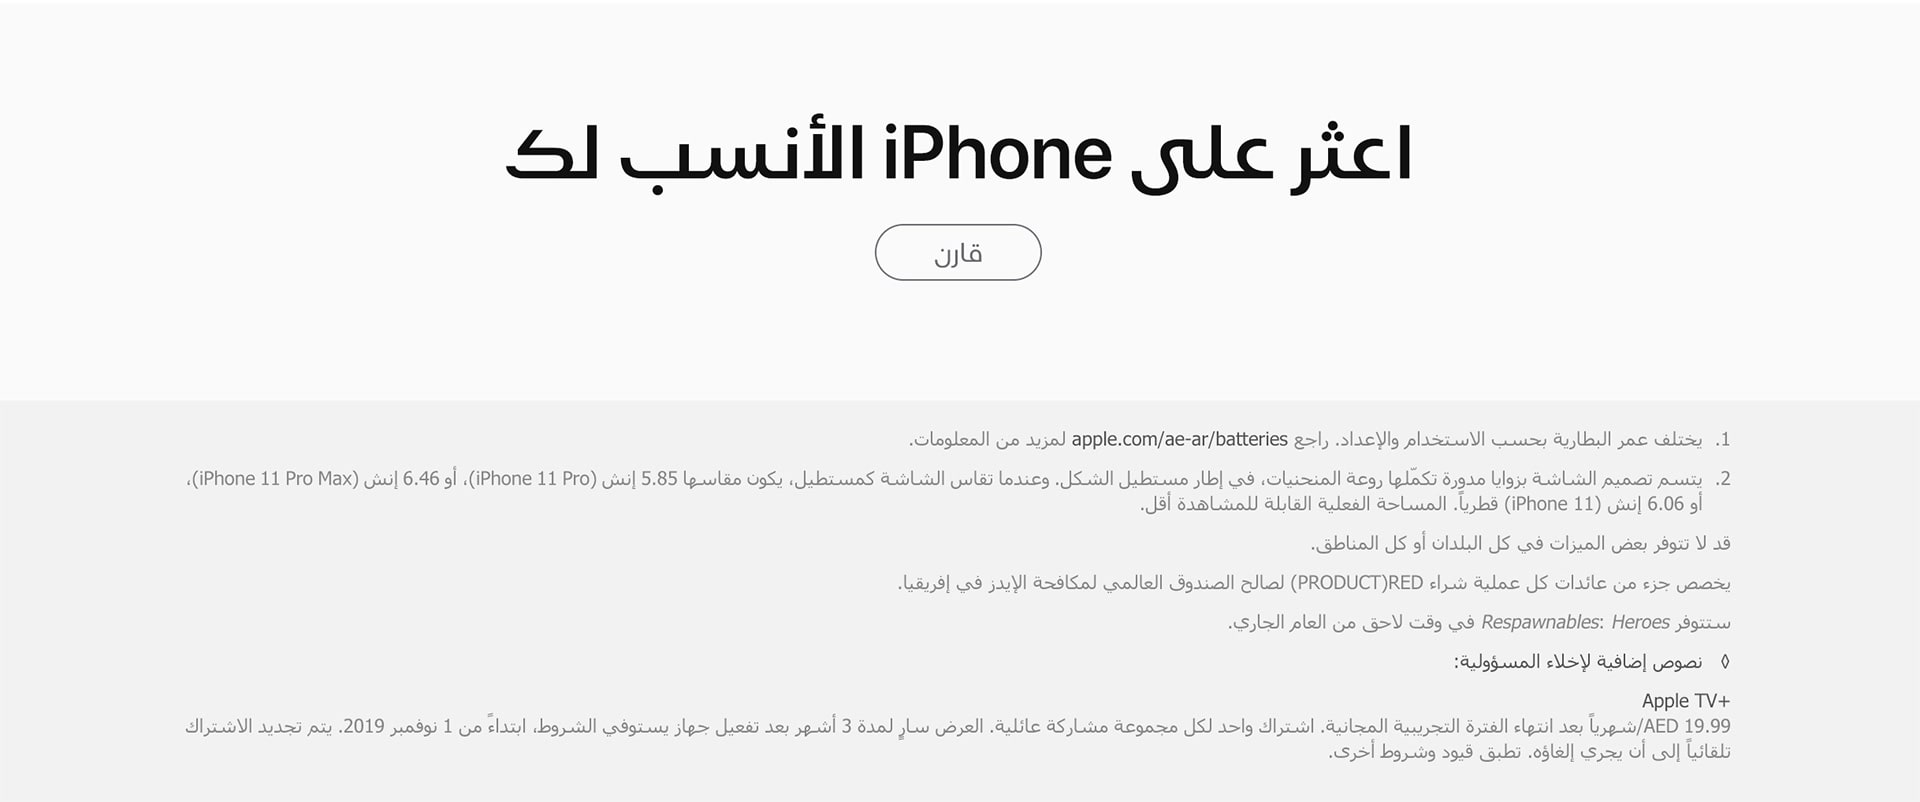 apple-iphone11-price-uae-etisalat-overview-ar-6